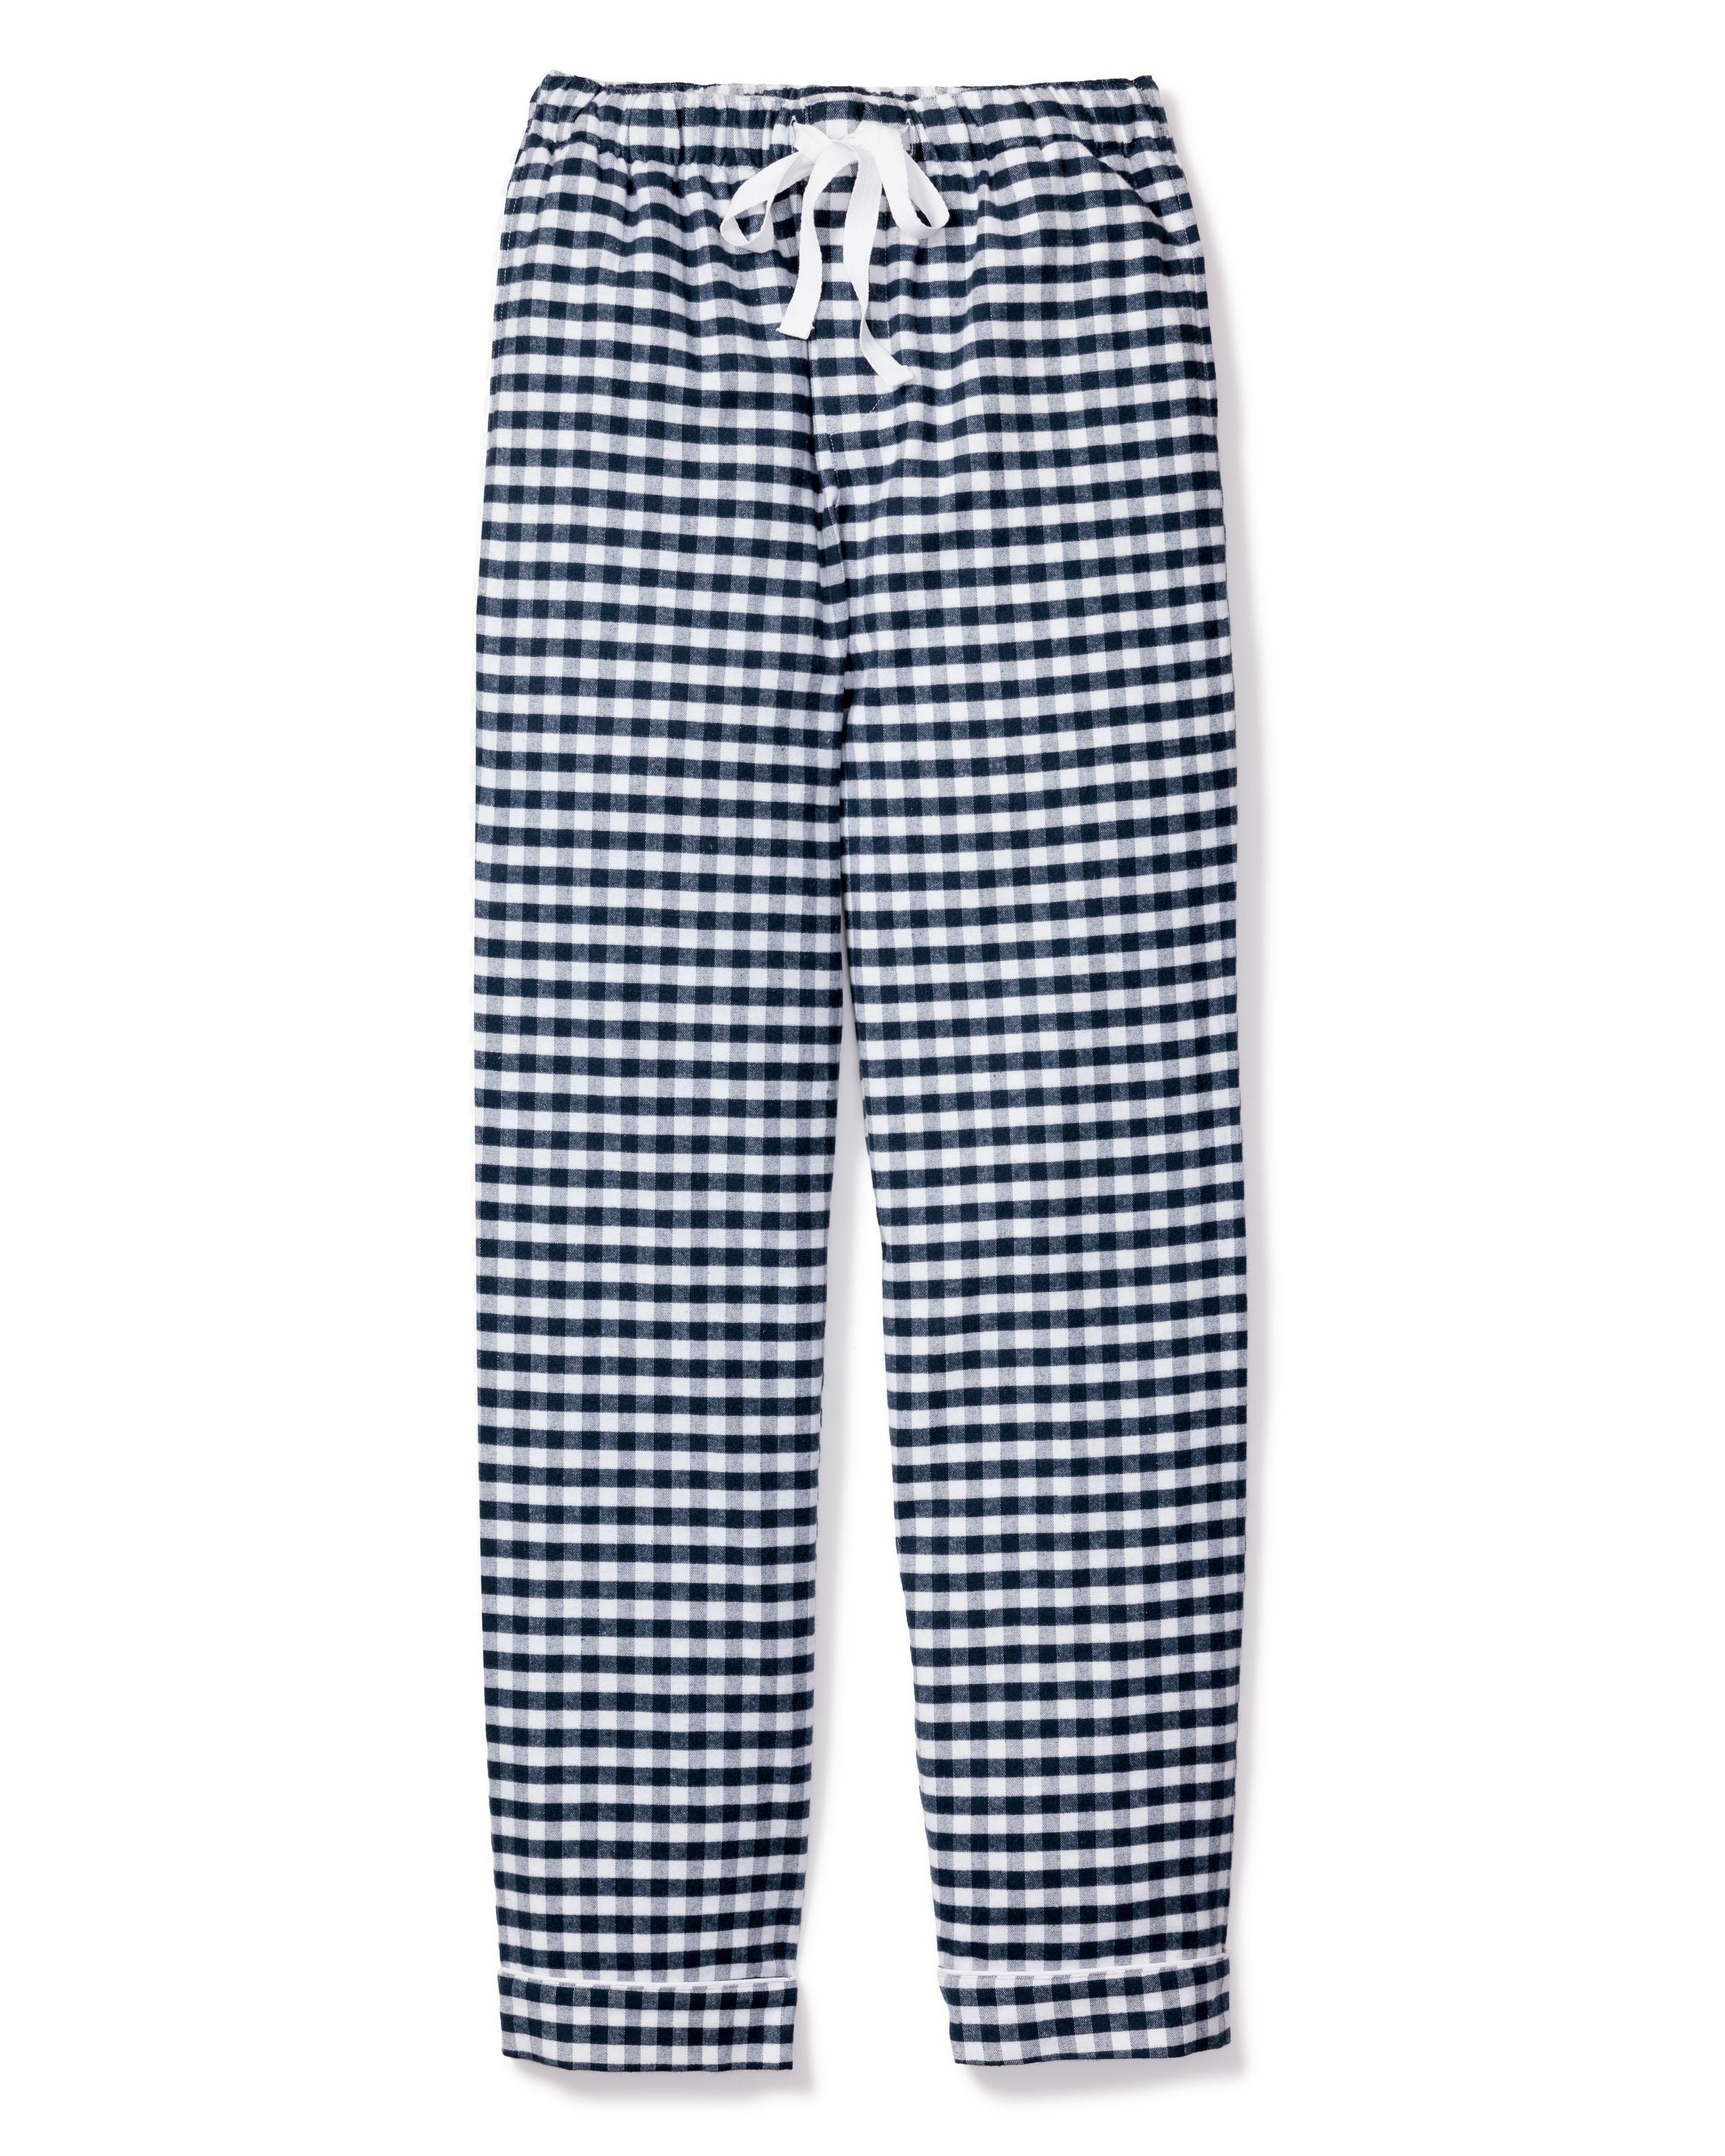 Men's Twill Pajama Pant in Navy Gingham